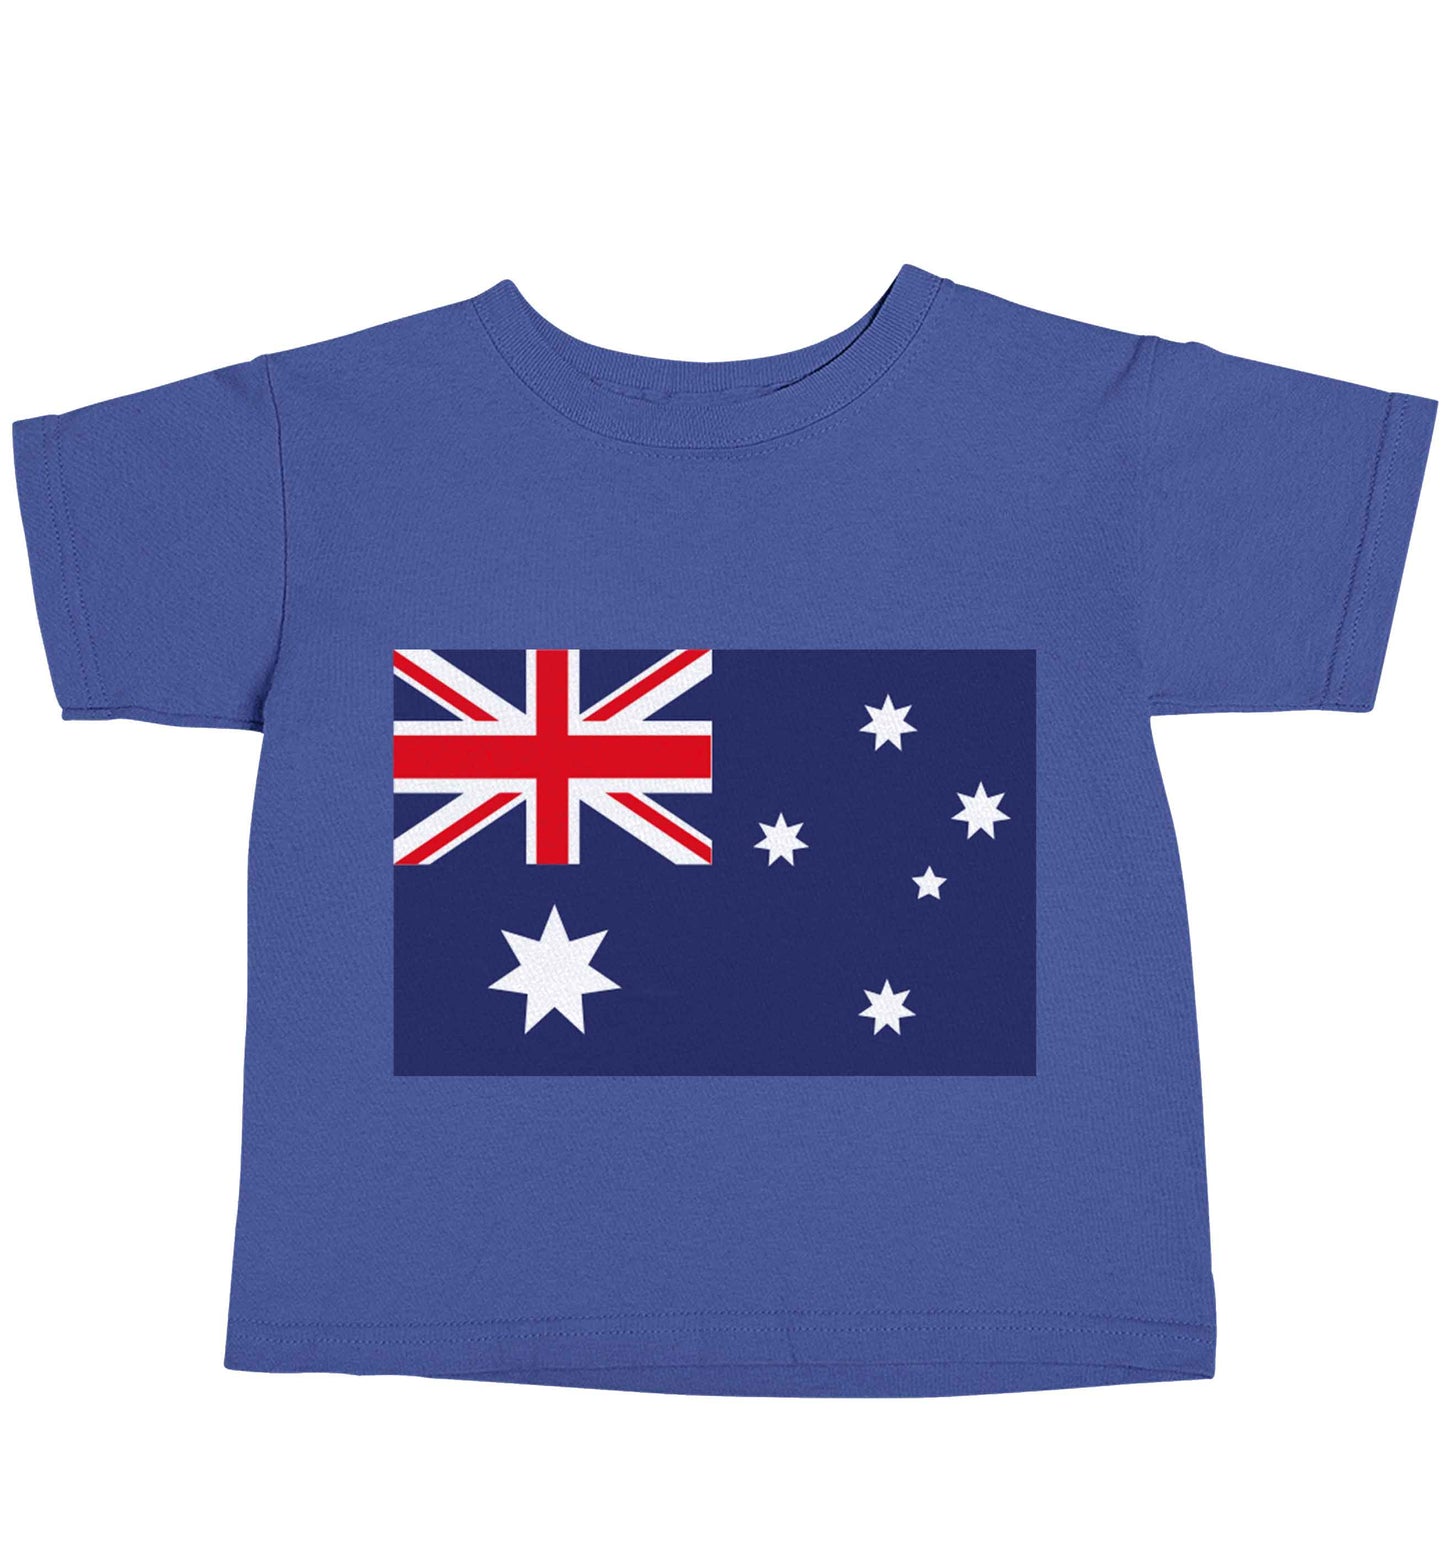 Australian Flag blue baby toddler Tshirt 2 Years